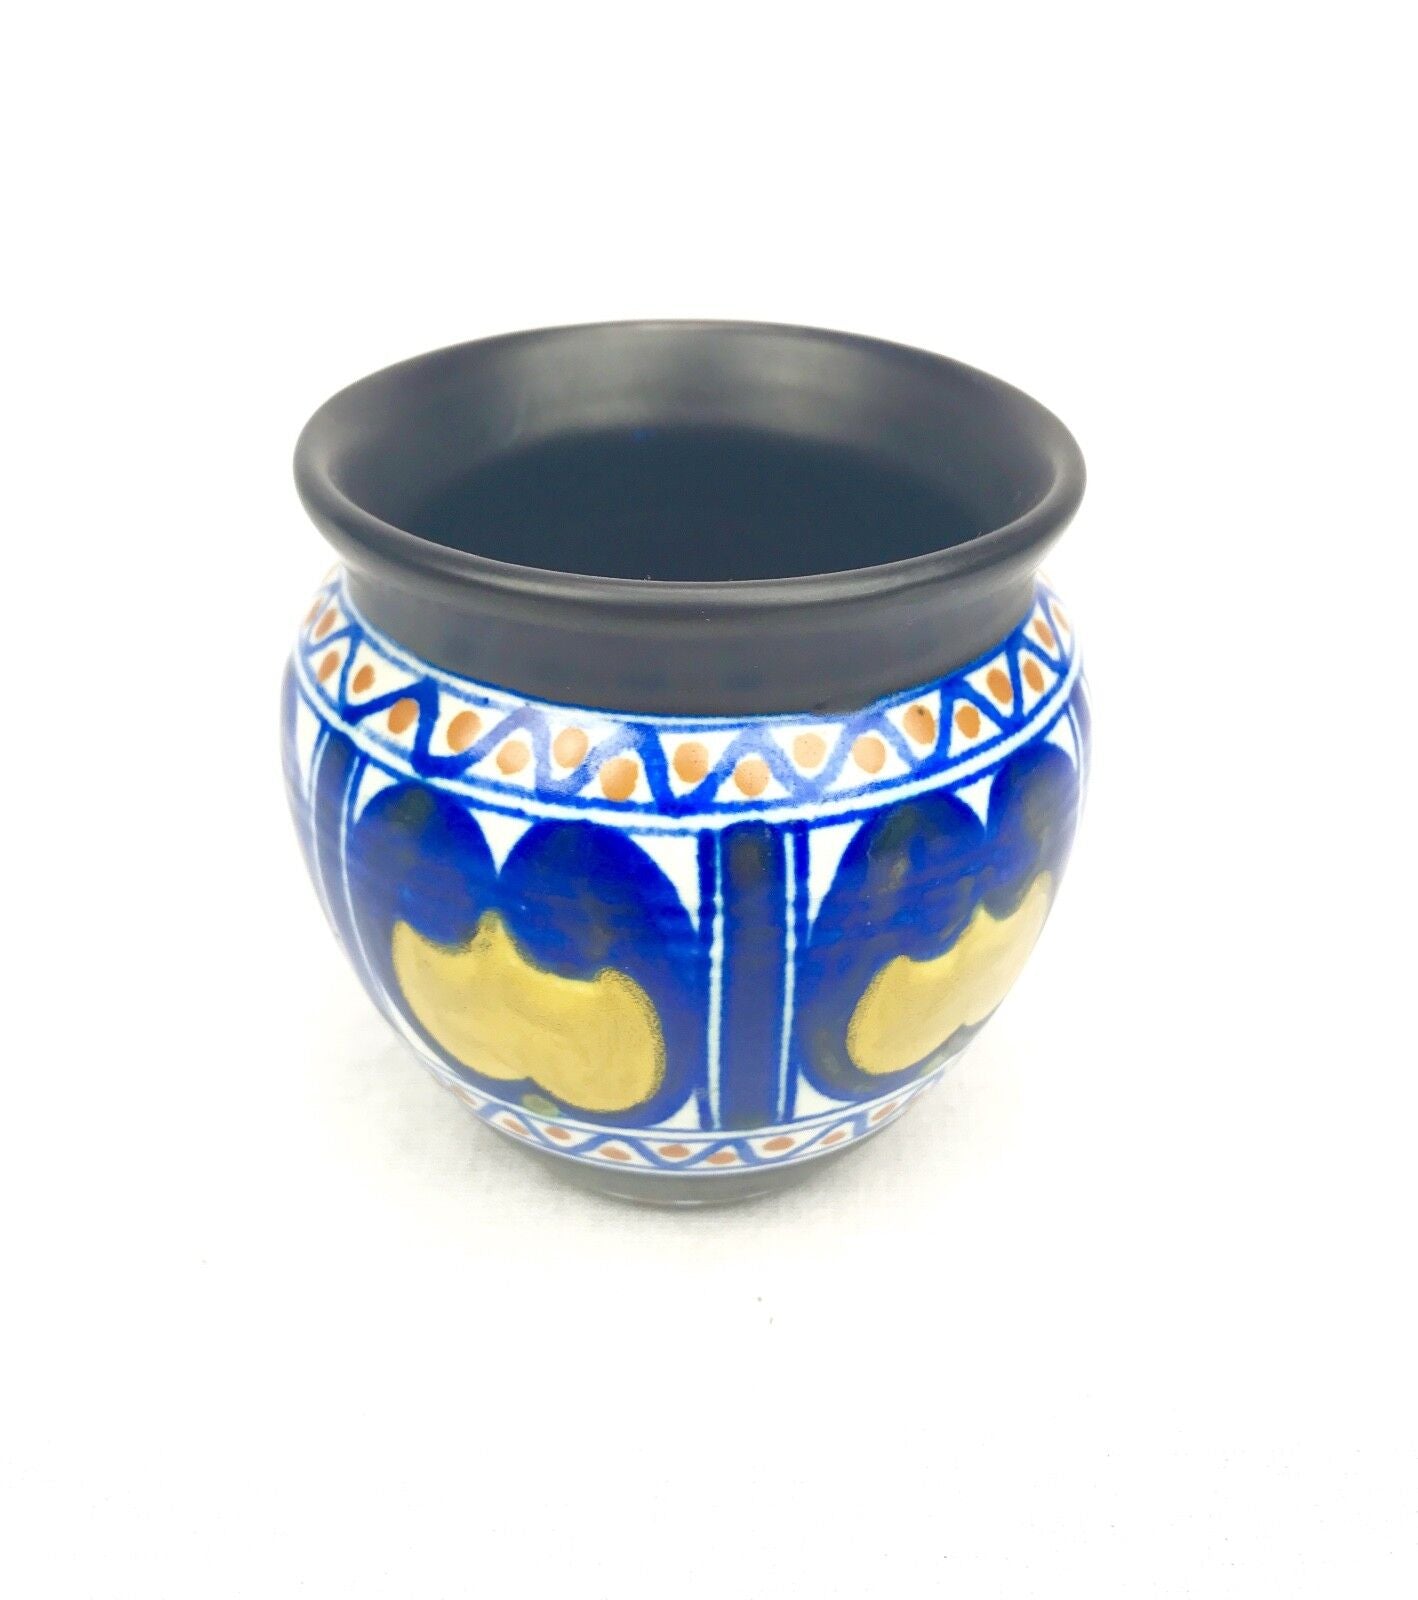 Gouda Pottery / Vase / Bowl / Art Deco / Blue / Yellow / Brown / Antique